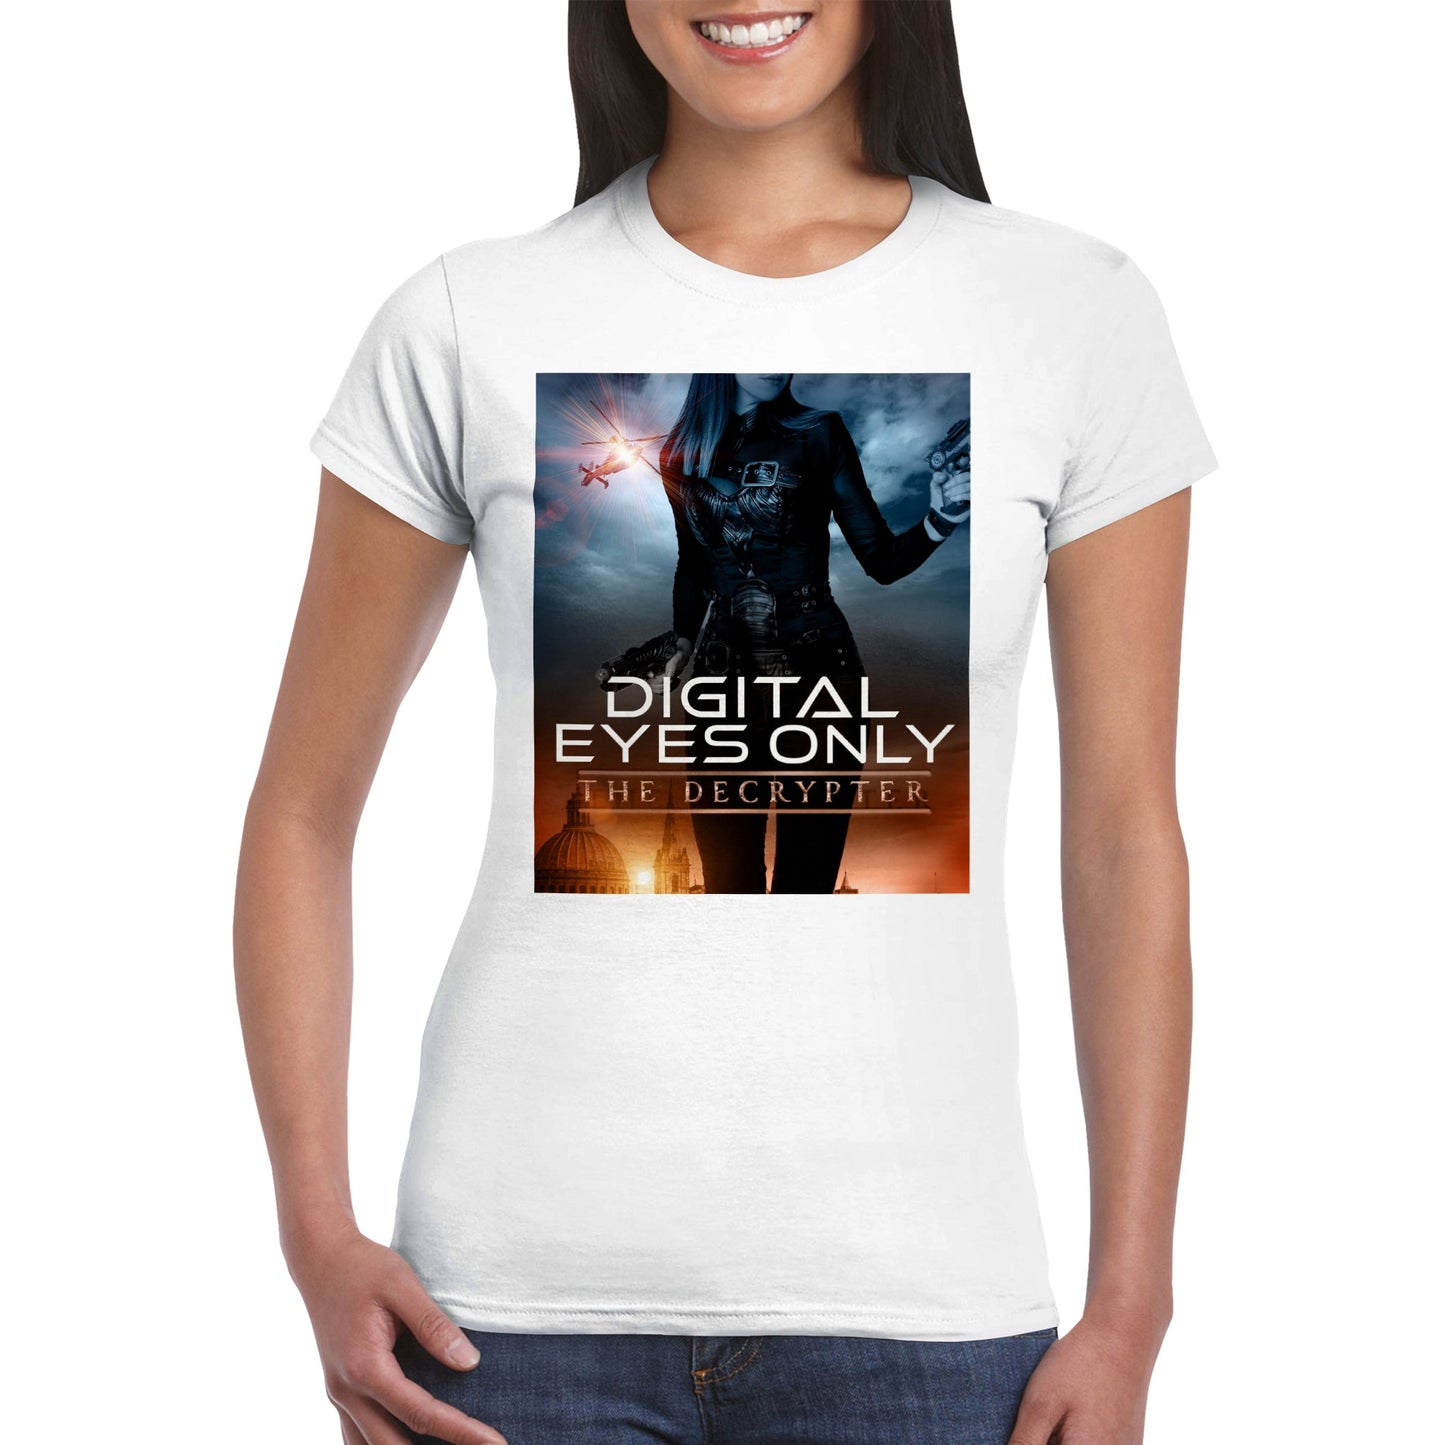 Digital Eyes Only Classic Women's Crewneck T-shirt